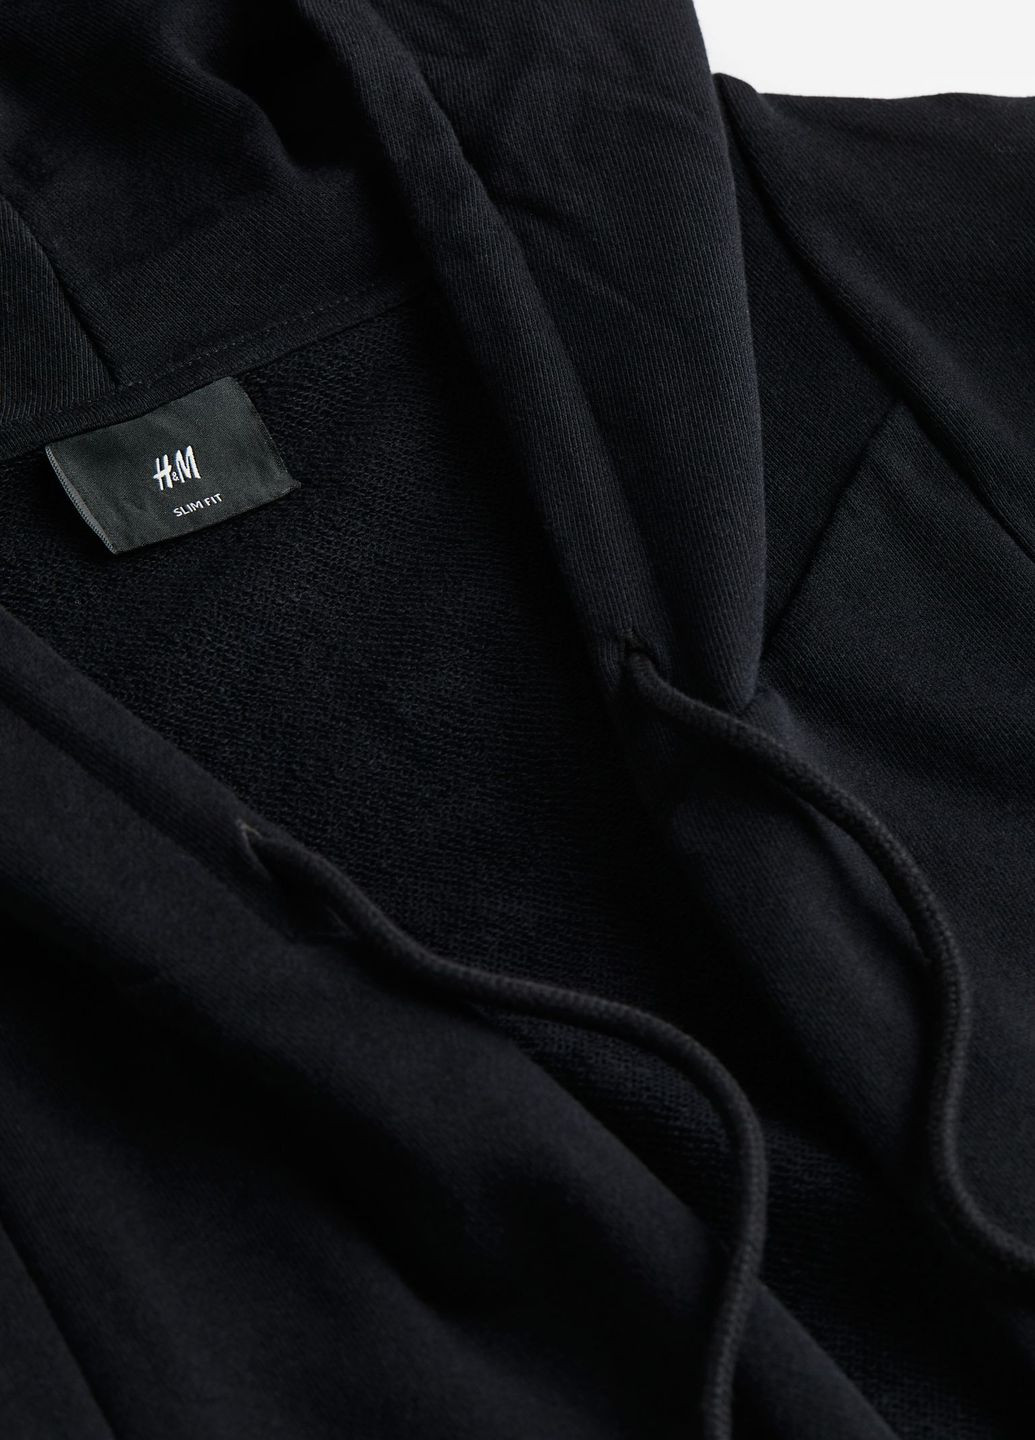 Черный демисезонный кардиган H&M